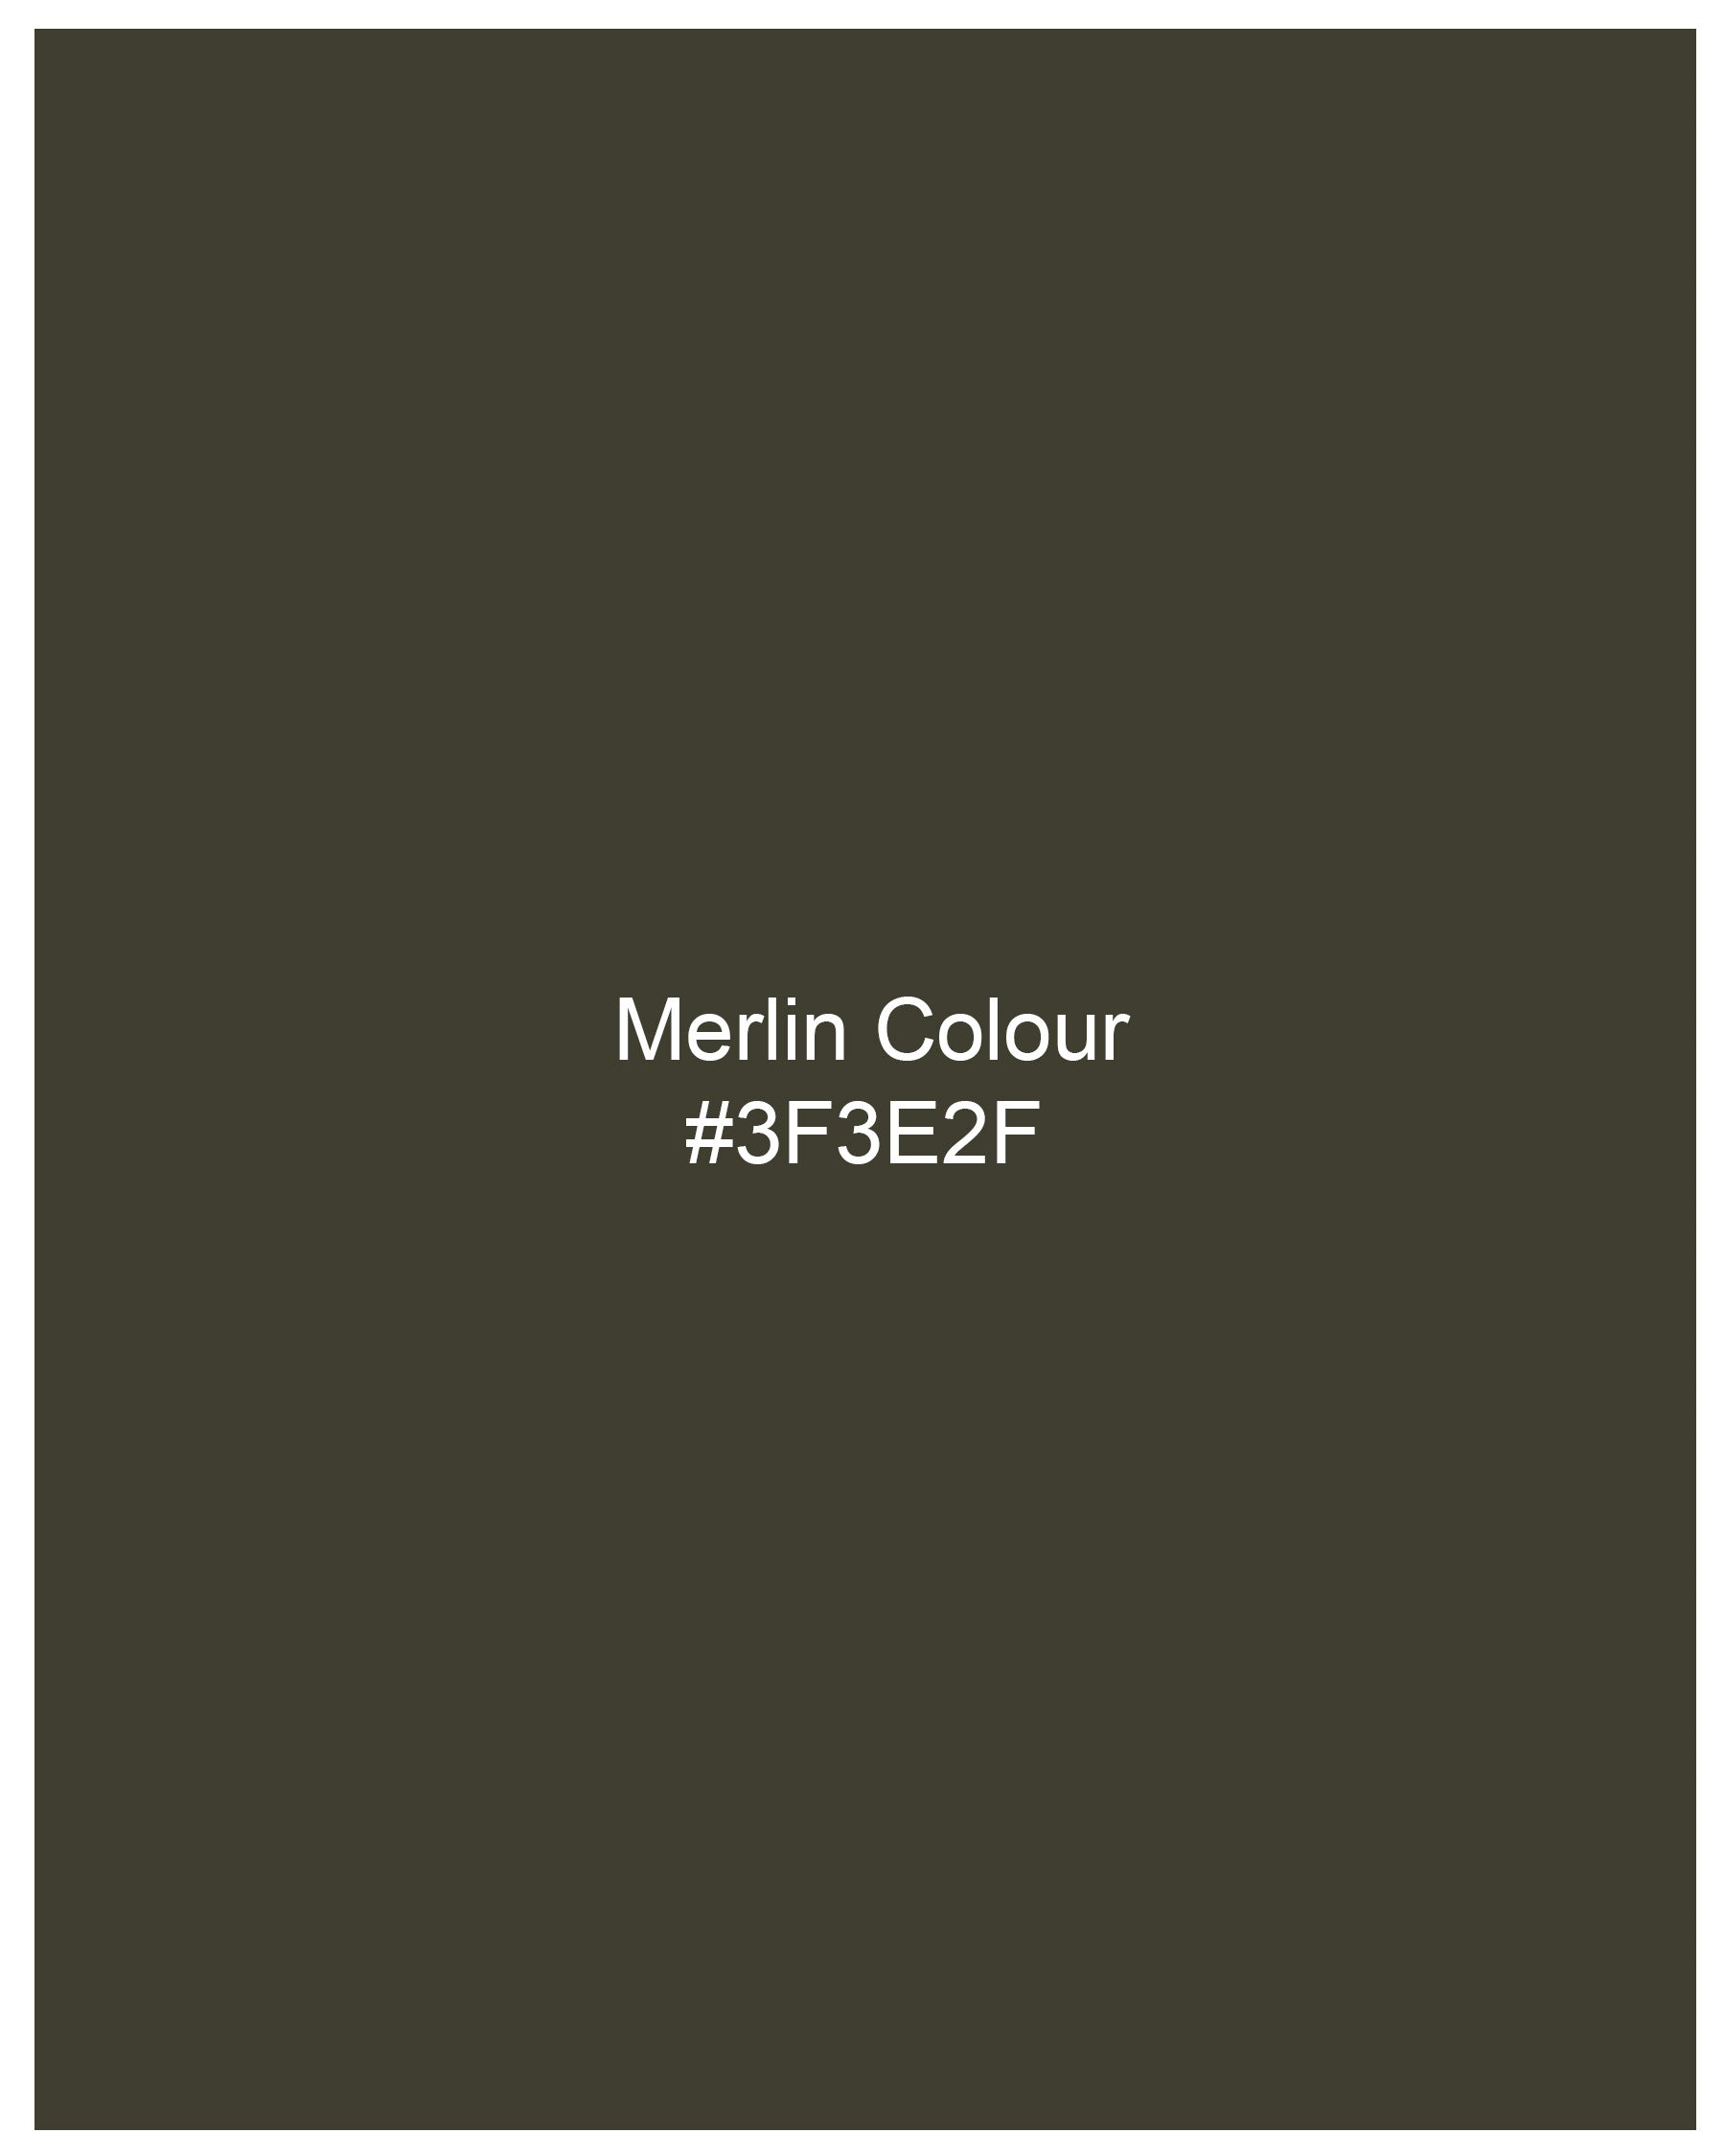 Merlin Green With Black Embroider Lines Twill Premium Cotton Shirt 8036-BLK-38, 8036-BLK-H-38, 8036-BLK-39,8036-BLK-H-39, 8036-BLK-40, 8036-BLK-H-40, 8036-BLK-42, 8036-BLK-H-42, 8036-BLK-44, 8036-BLK-H-44, 8036-BLK-46, 8036-BLK-H-46, 8036-BLK-48, 8036-BLK-H-48, 8036-BLK-50, 8036-BLK-H-50, 8036-BLK-52, 8036-BLK-H-52